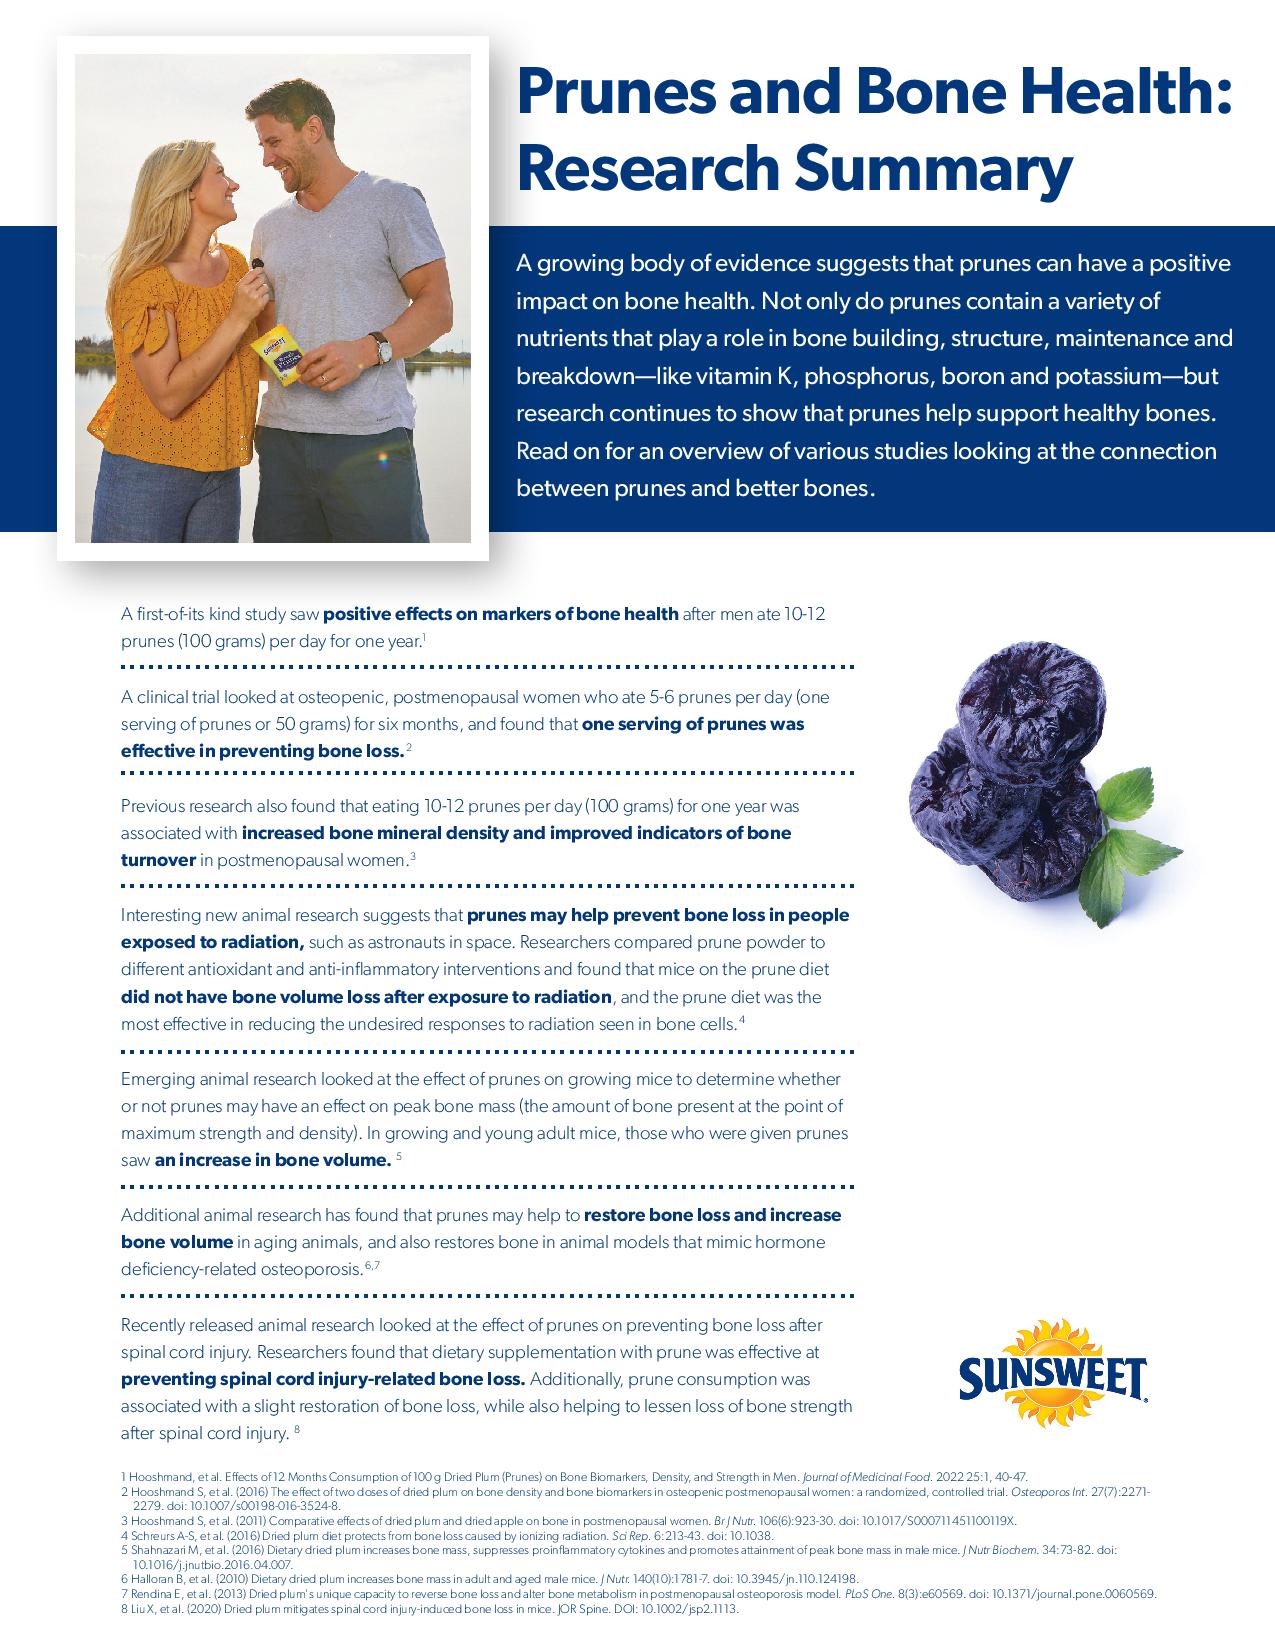 Sunsweet Bone Health Research Summary